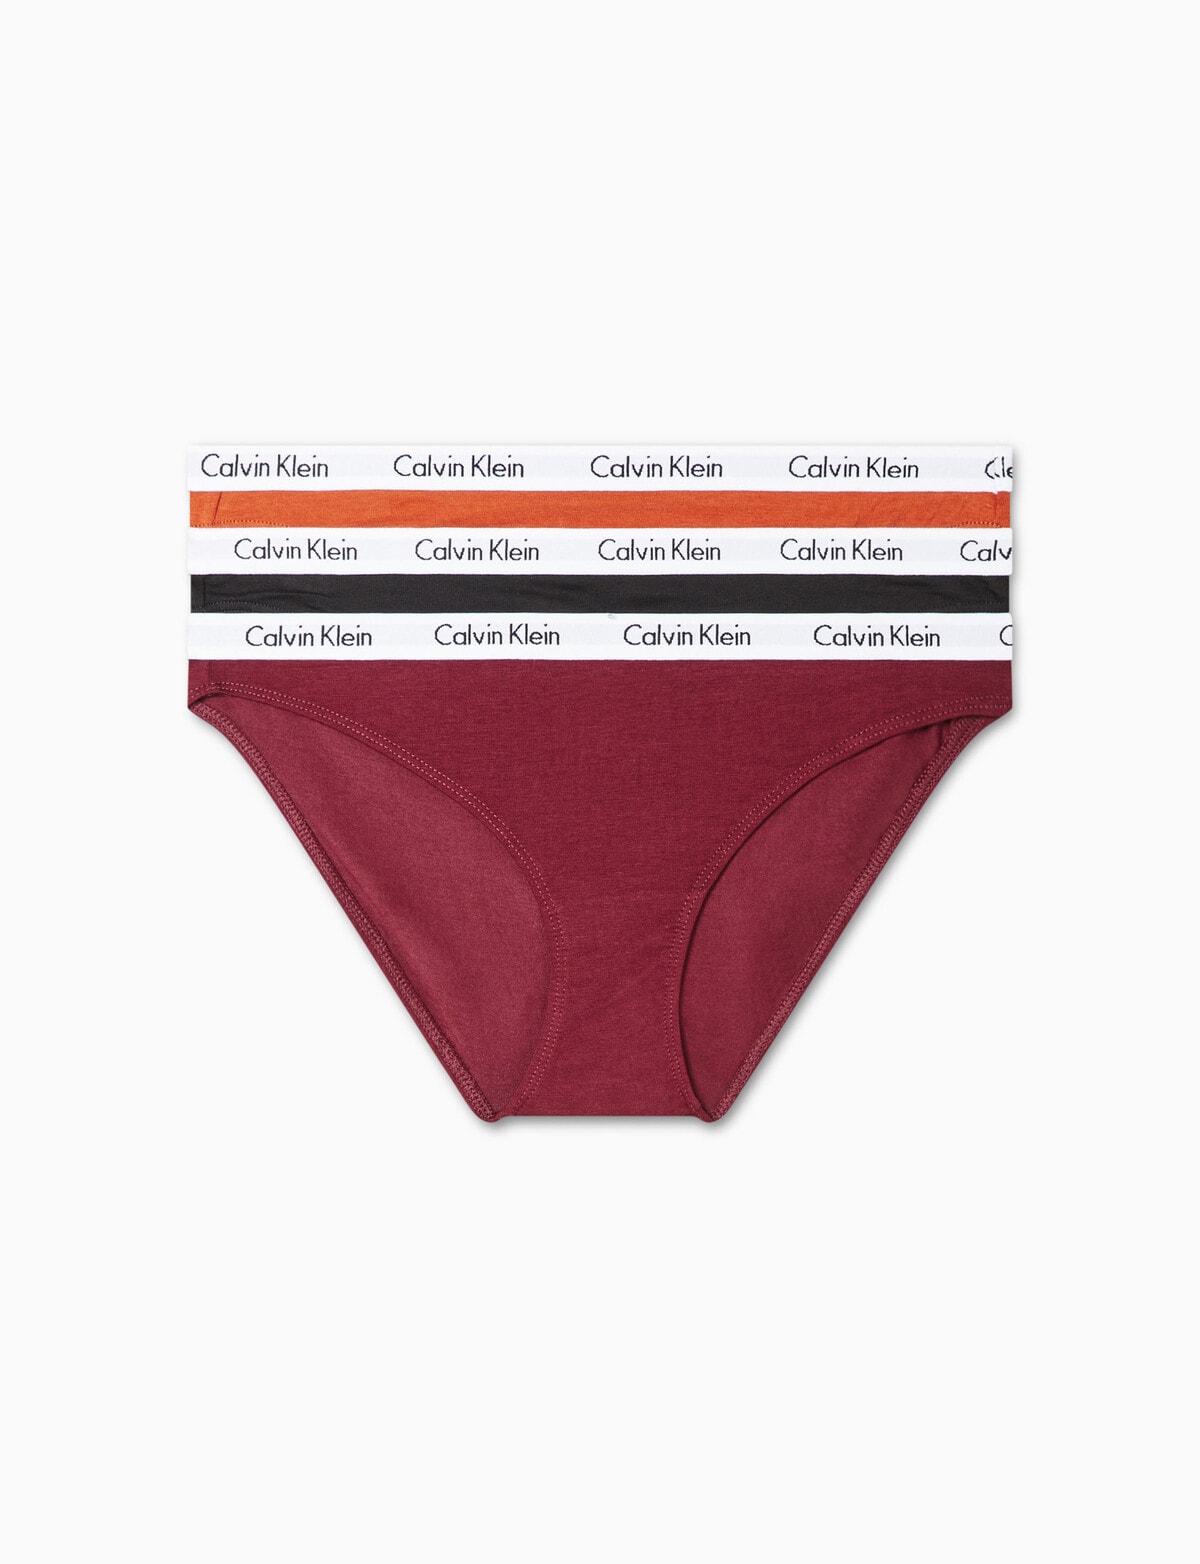 Calvin Klein Carousel Bikini, 3-Pack, Gingerbread, Black & Tawny Port,  XS-XL - Briefs